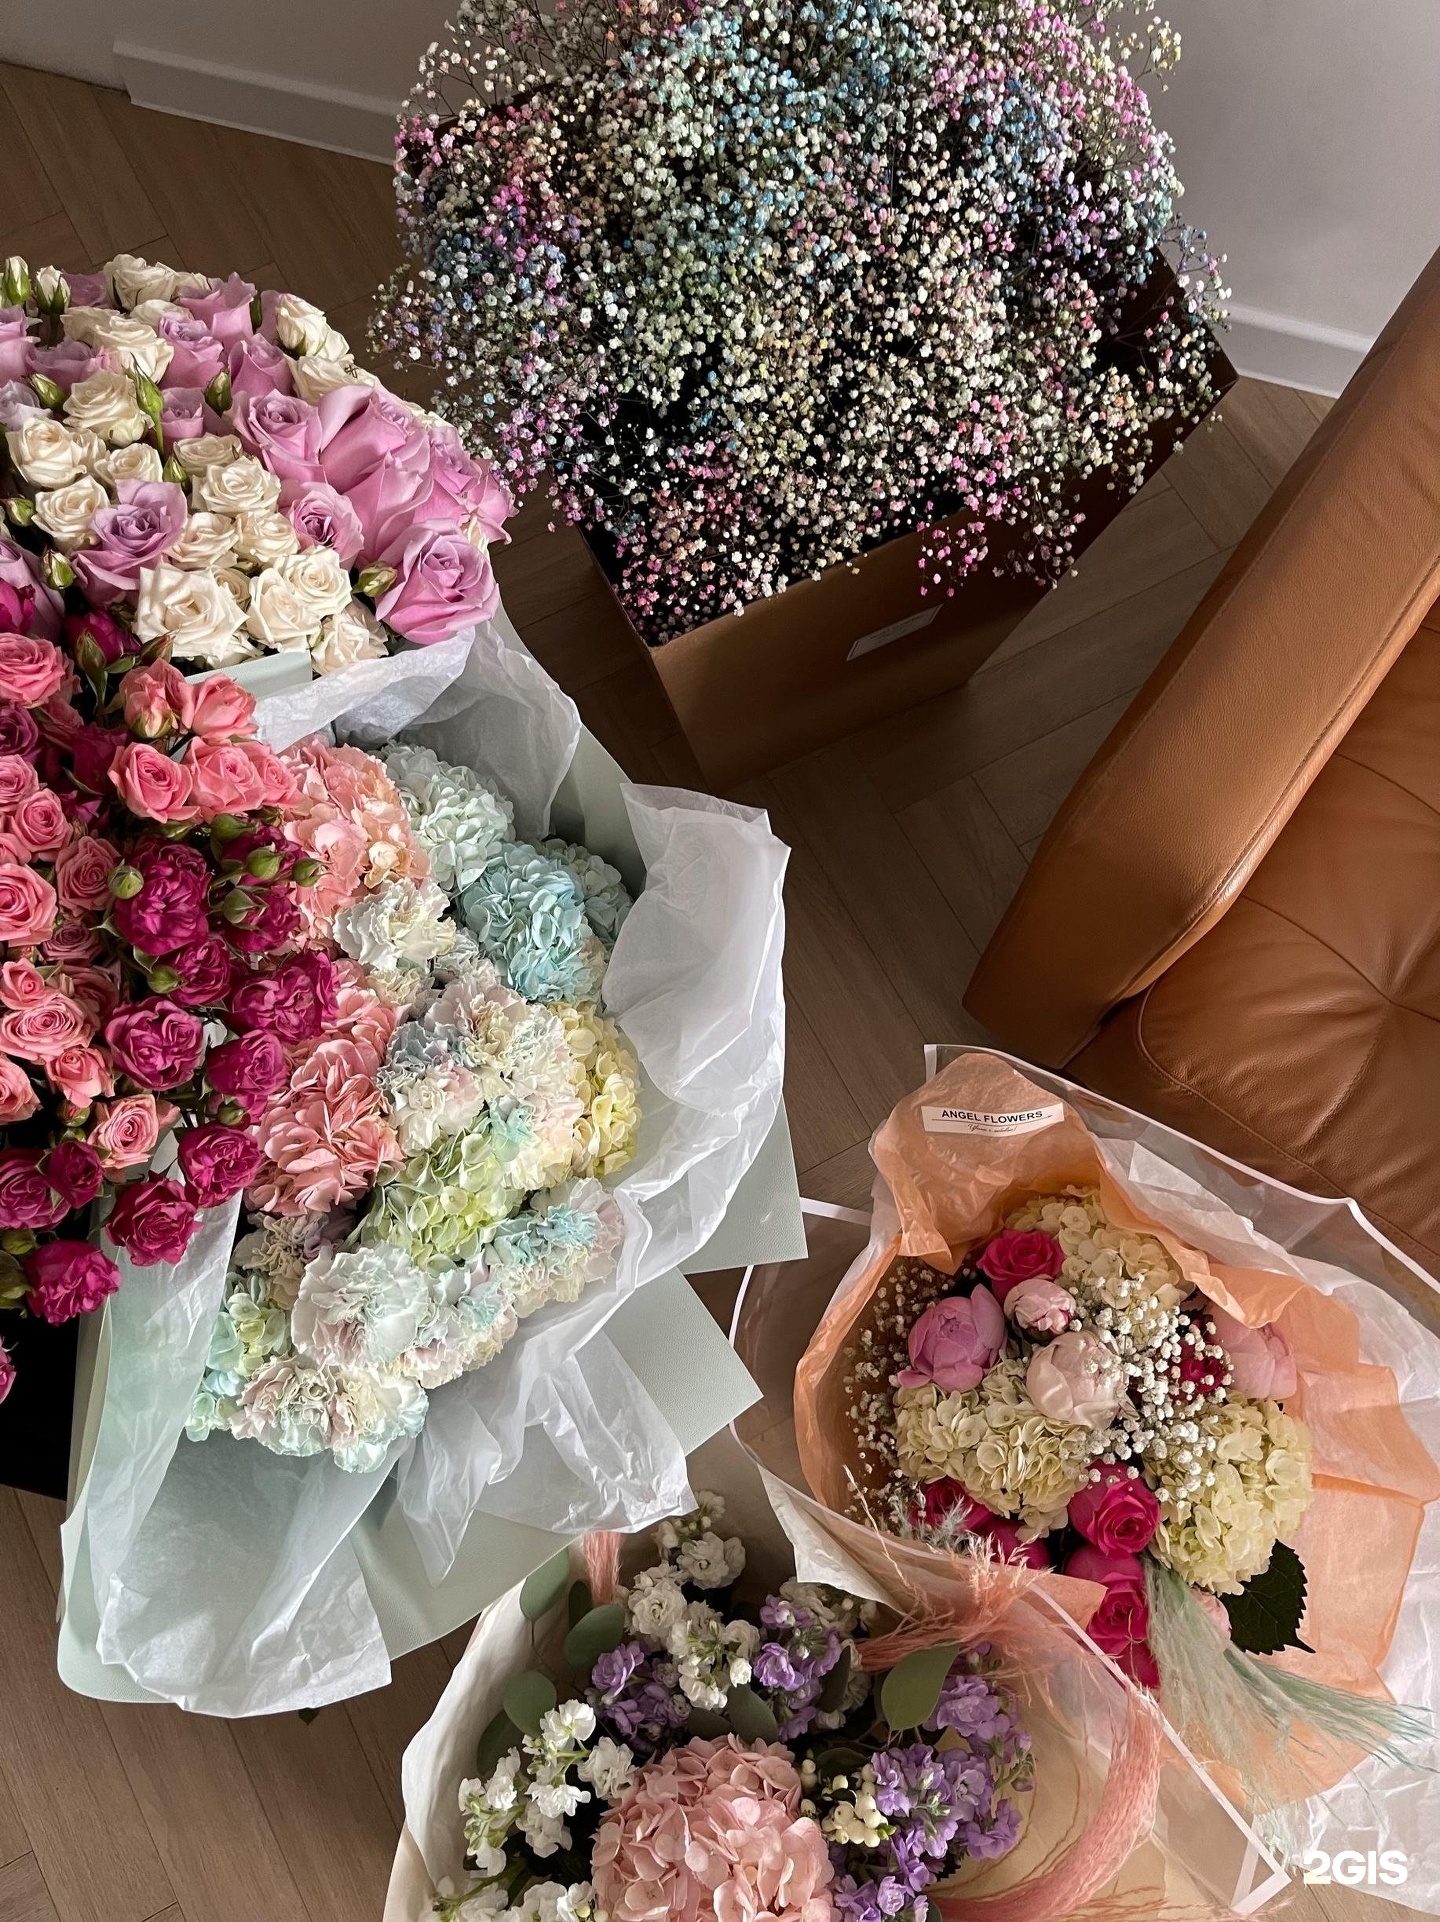 Цветы салон Нефтекамск. Цветок САЛОНУМА. Цветы в салоне Uni v фото. Angeline flowers